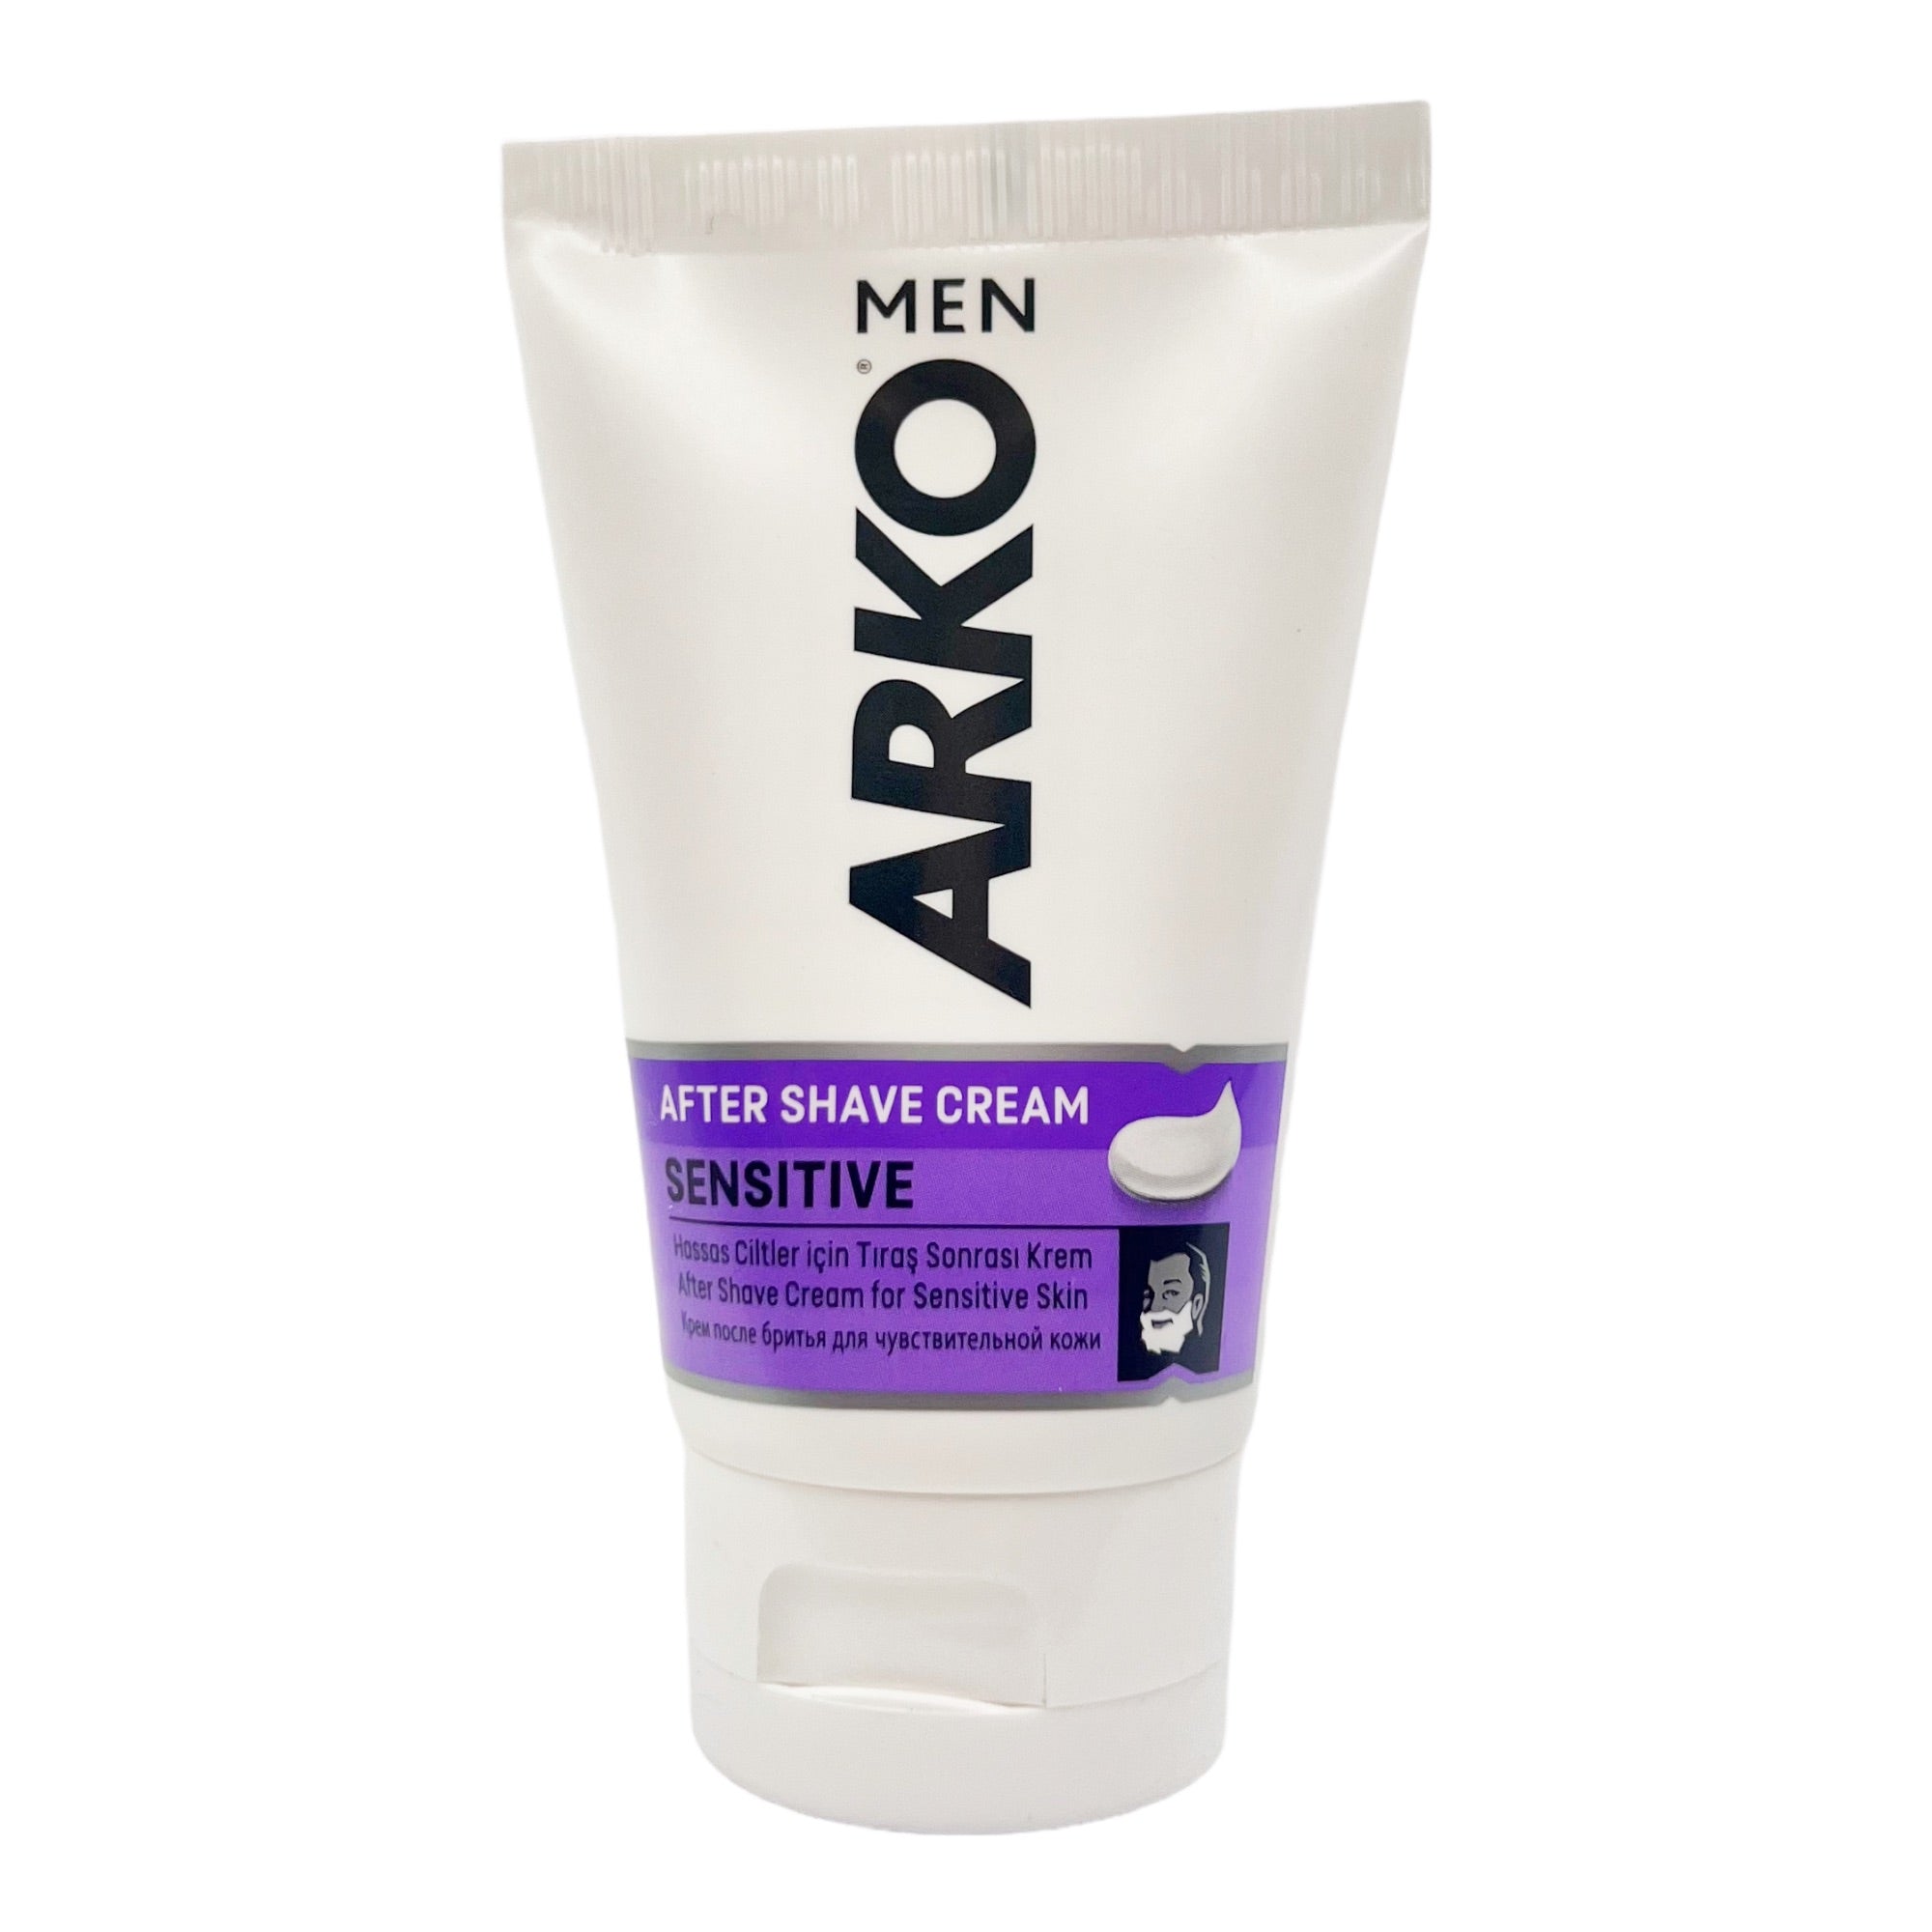 Arko - Men After Shave Cream Sensitive 50ml - Eson Direct